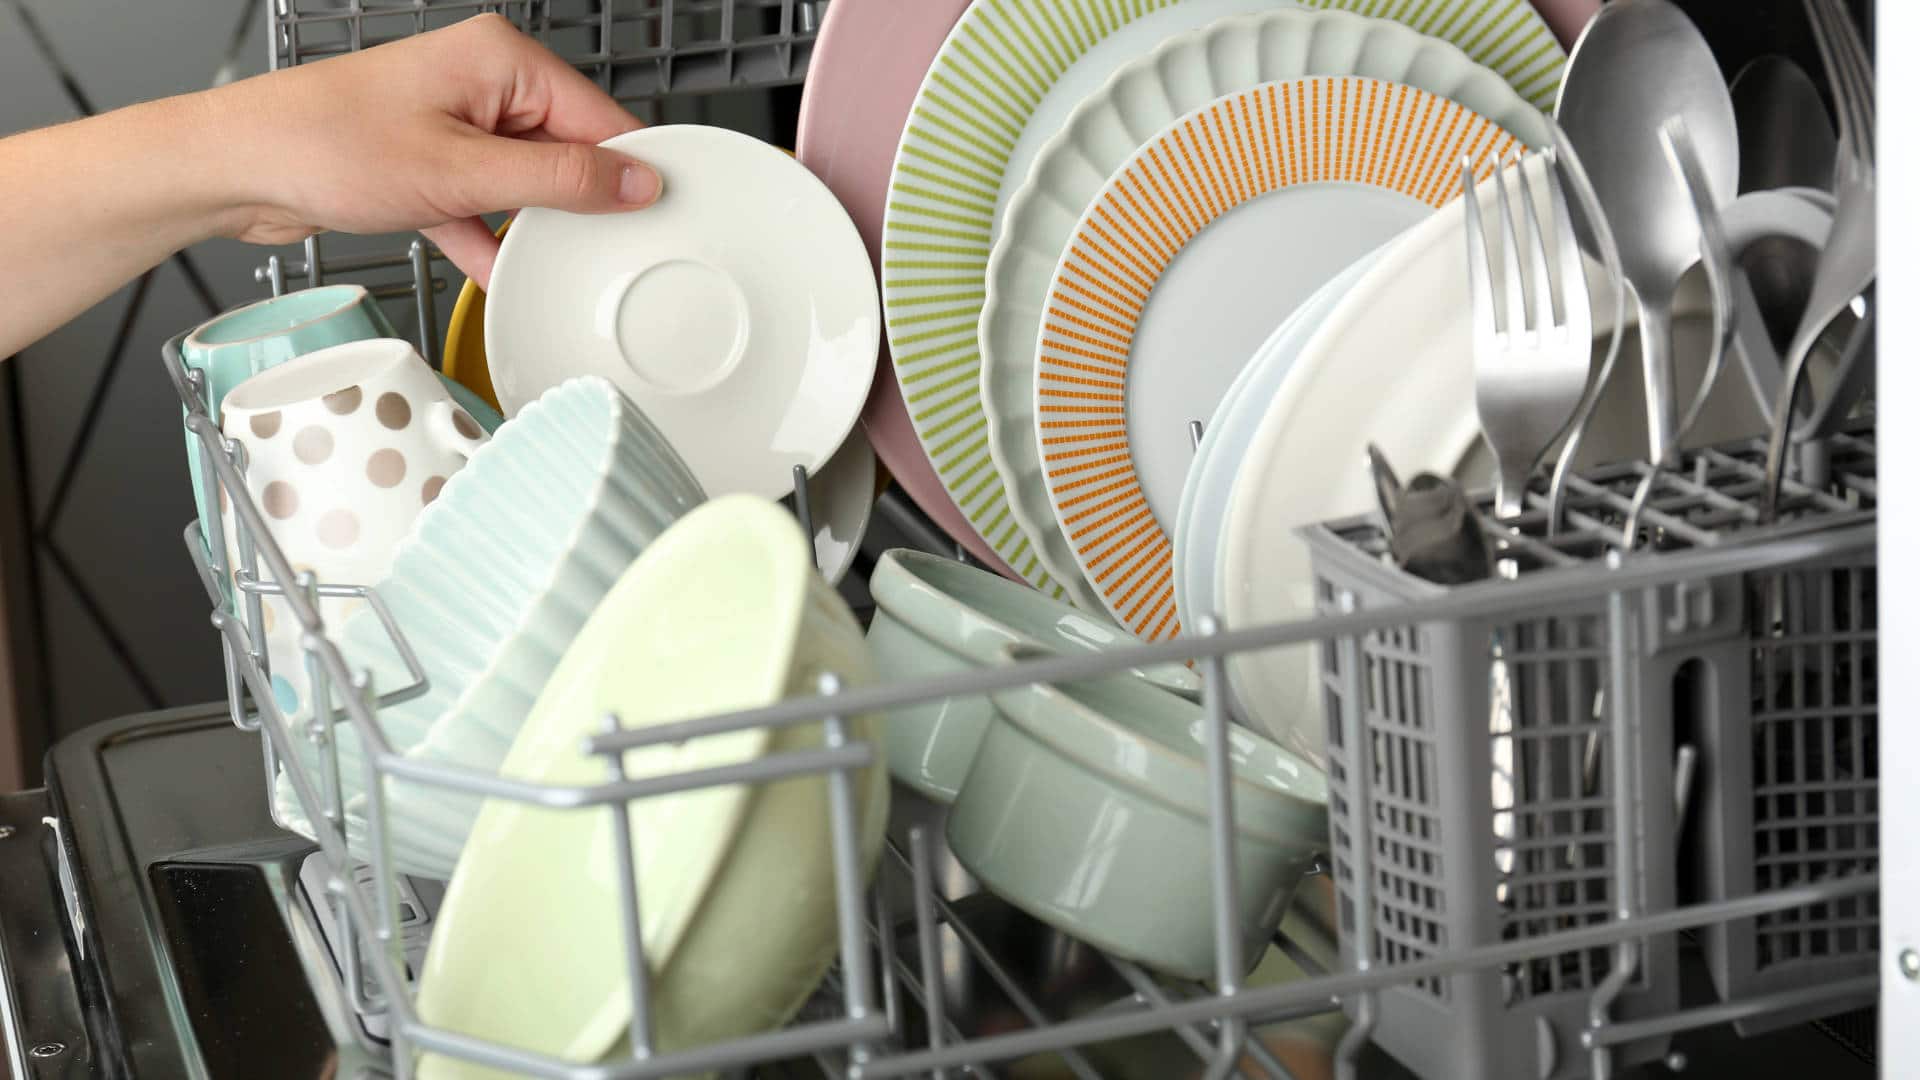 Does Preventative Maintenance Apply For Kitchen Appliances?